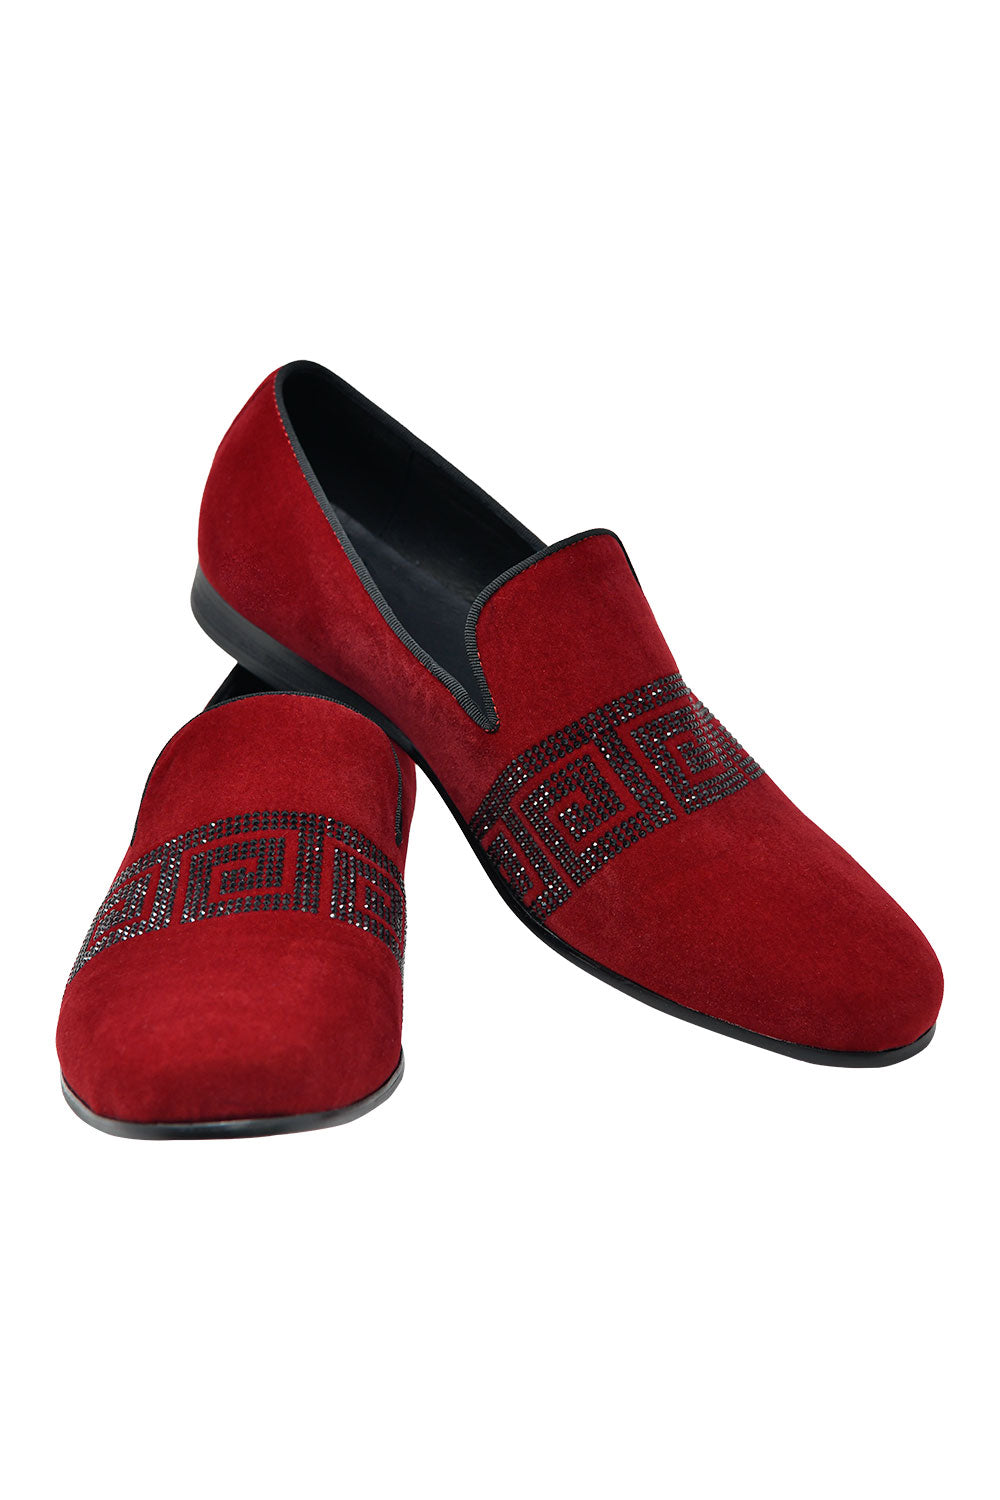 BARABAS Men's Rhinestone Greek key Pattern Slip On Dress Shoes SH3067 Red Black